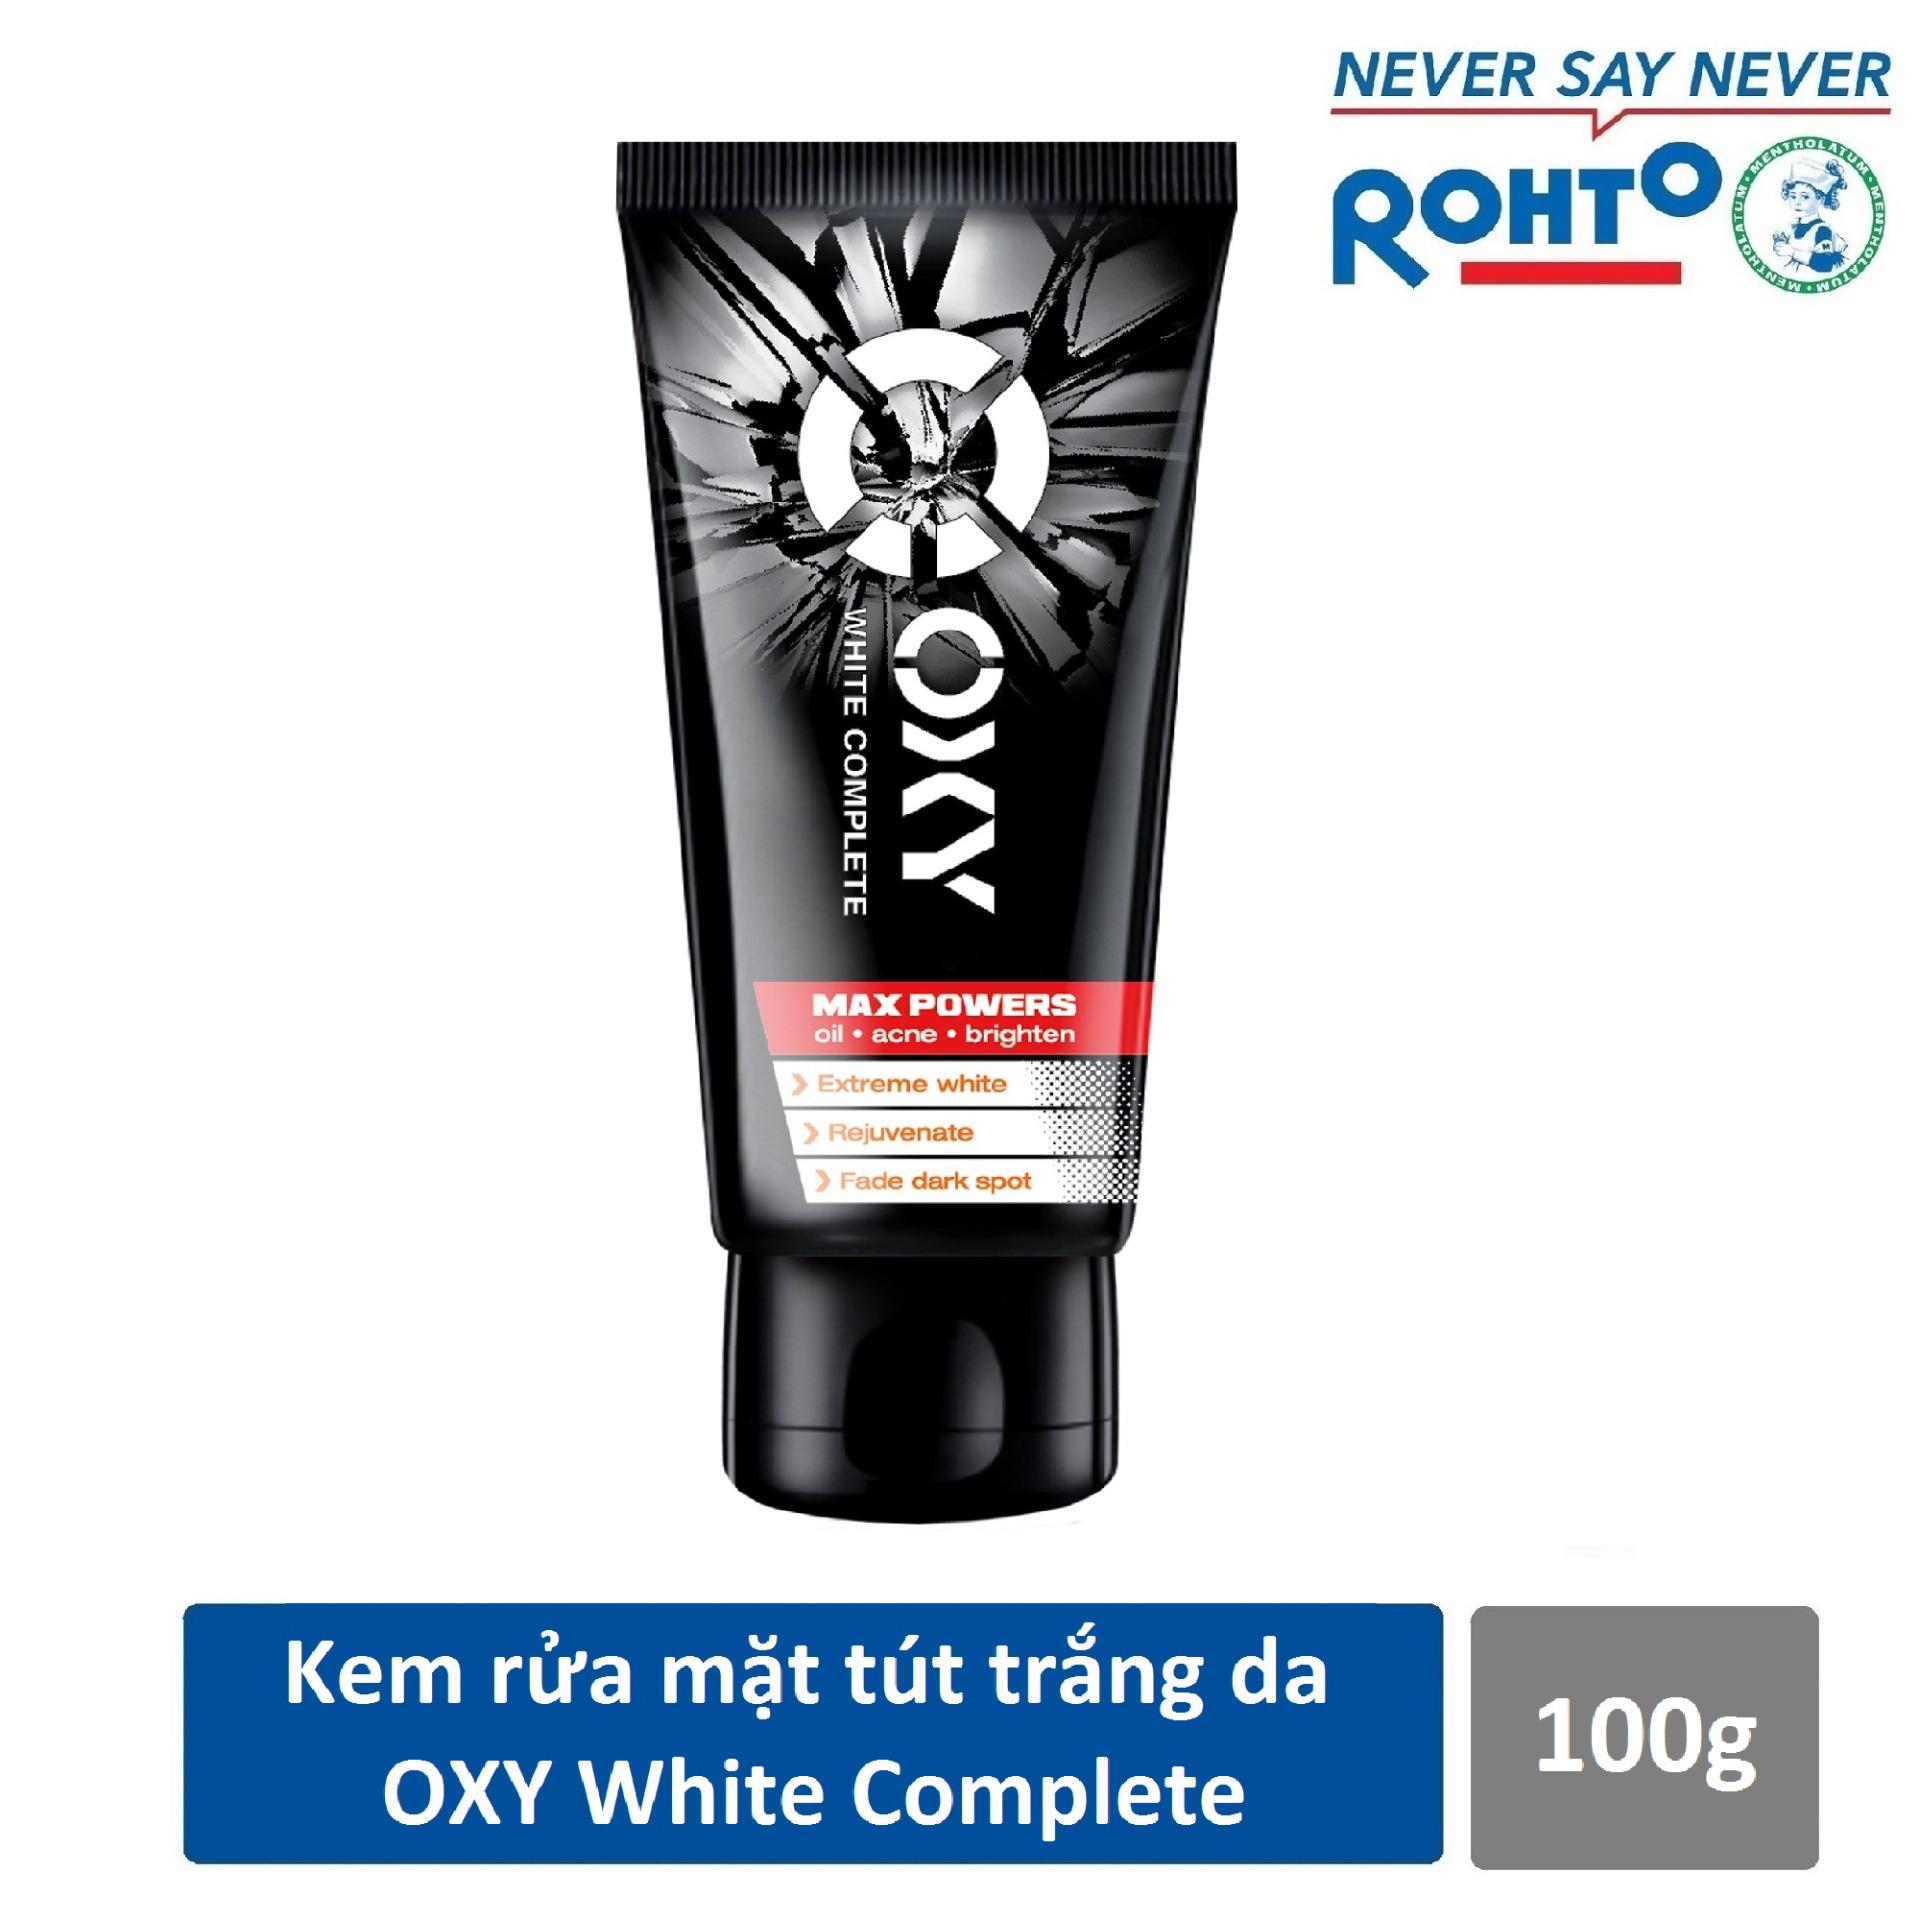 Kem rửa mặt tút da trắng khỏe cho nam Oxy White Complete 100g